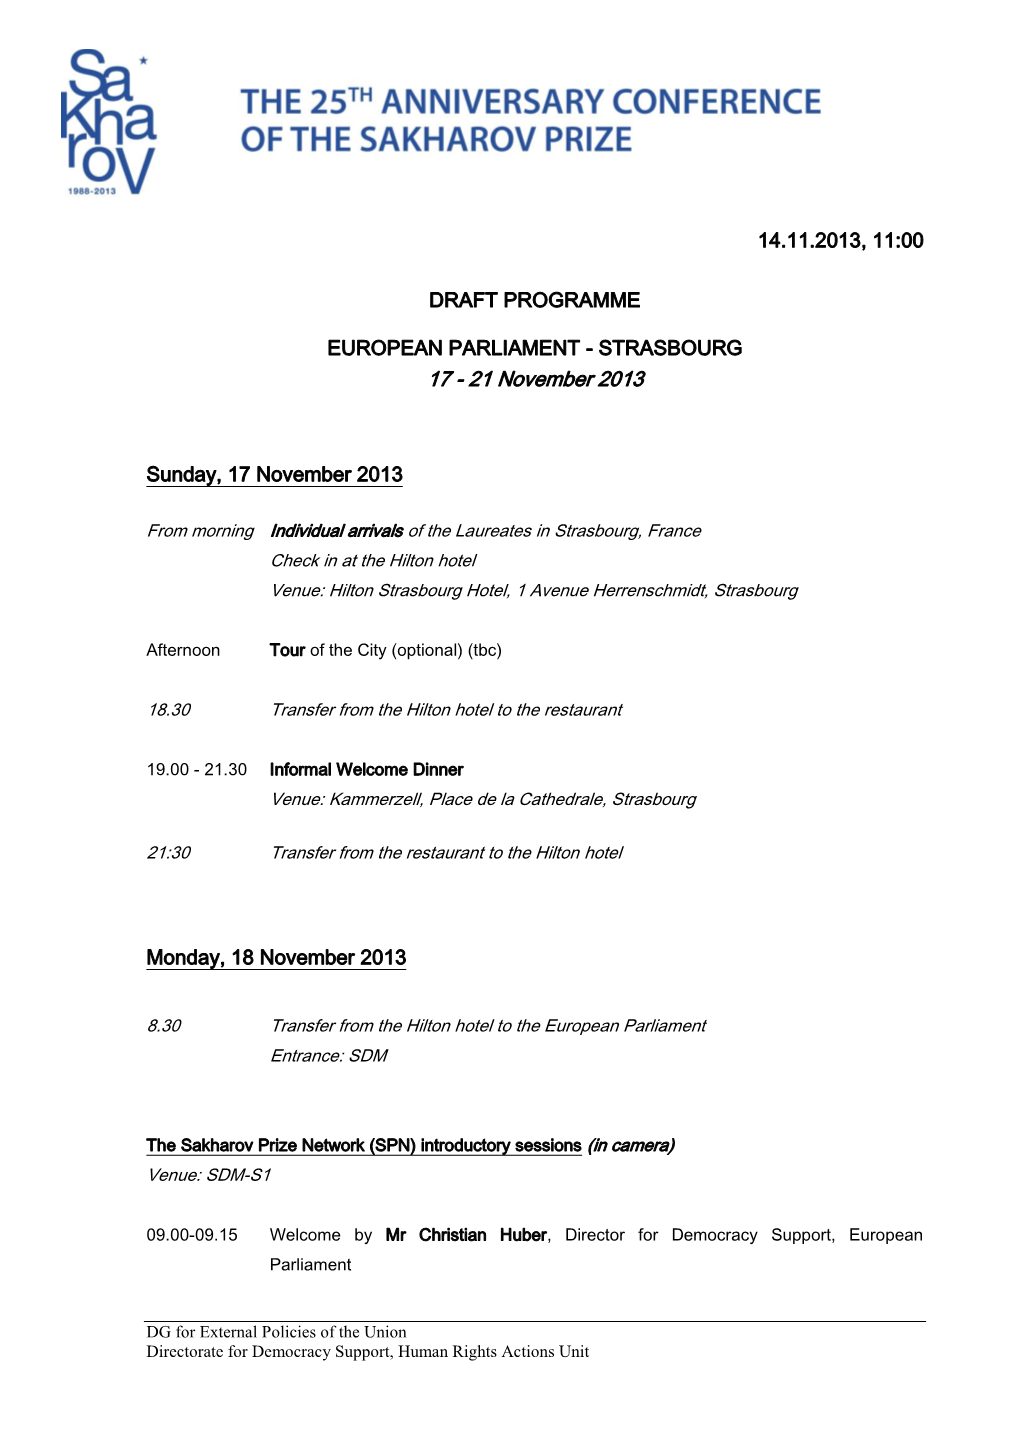 14.11.2013, 11:00 Draft Programme European